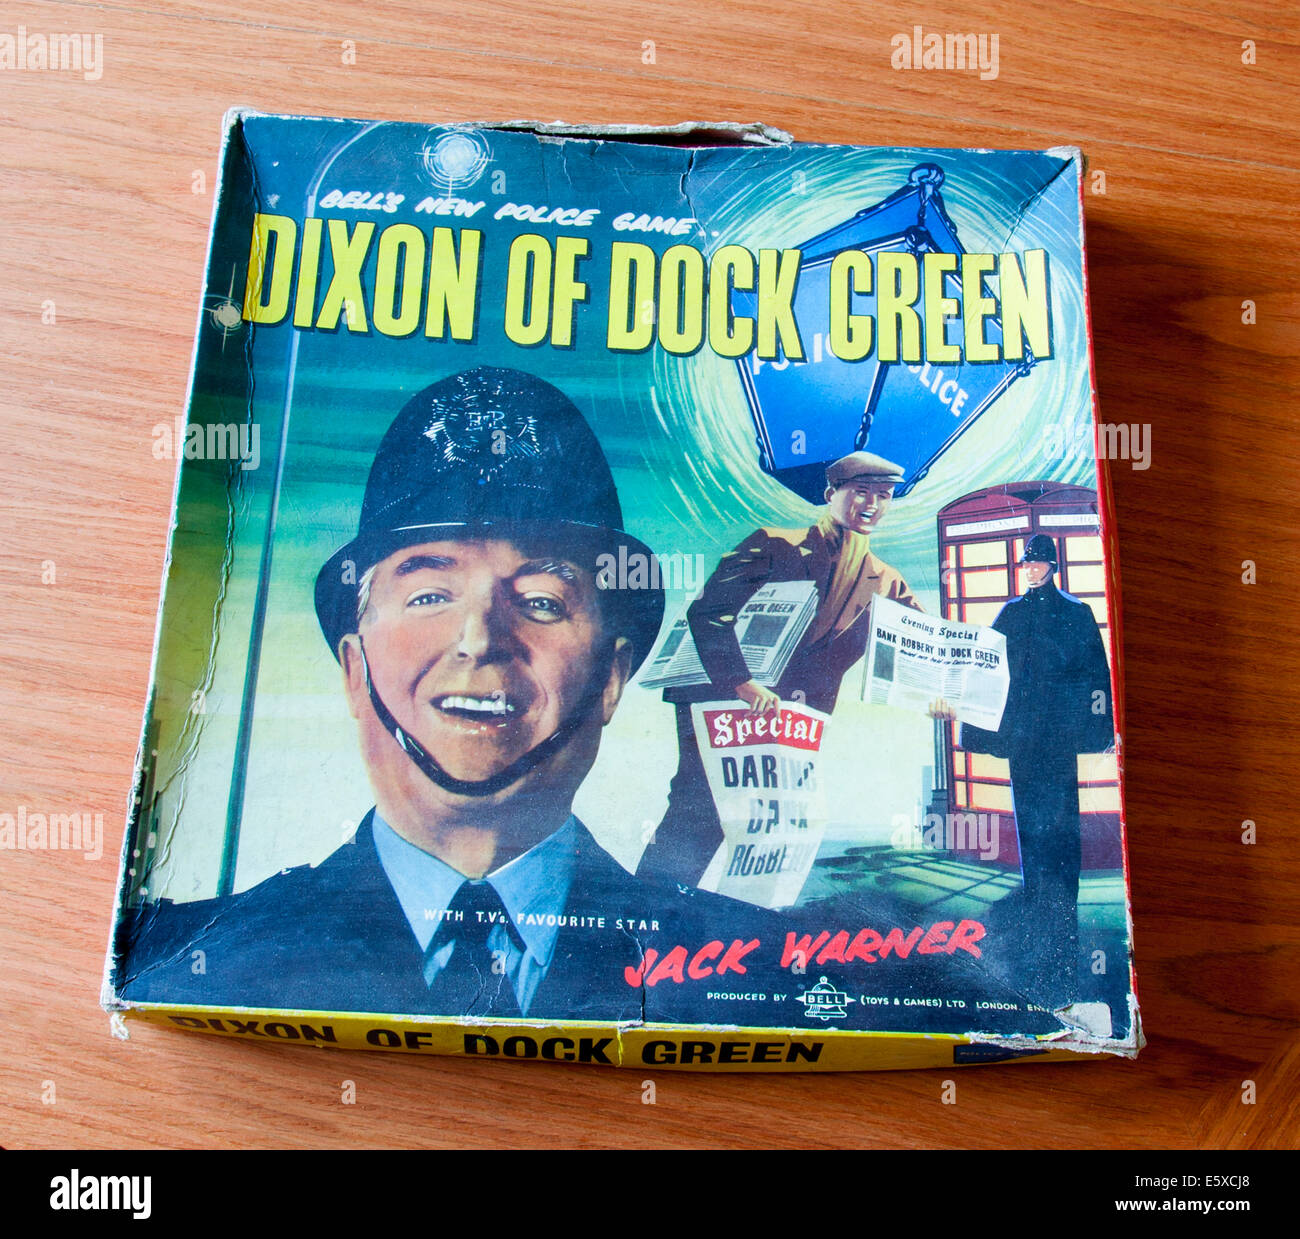 Dixon of Dock Green Board Game Stock Photo